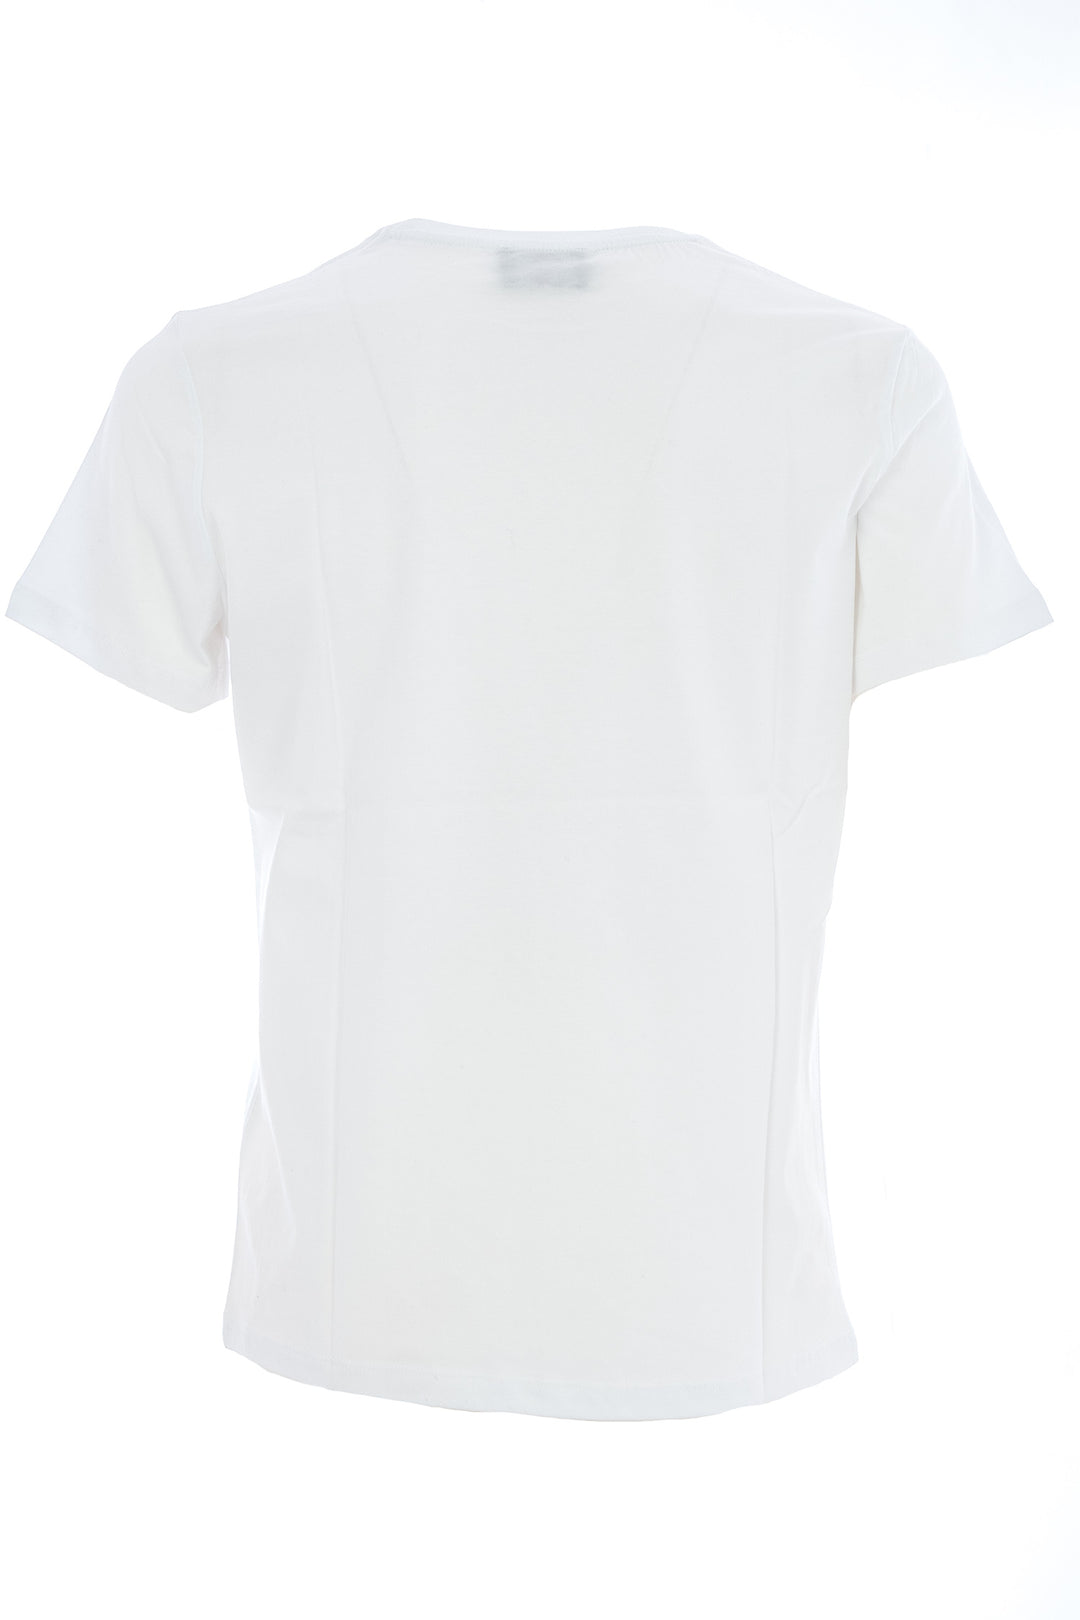 PEUTEREY T-shirt con logo ricamato bianca - Mancinelli 1954